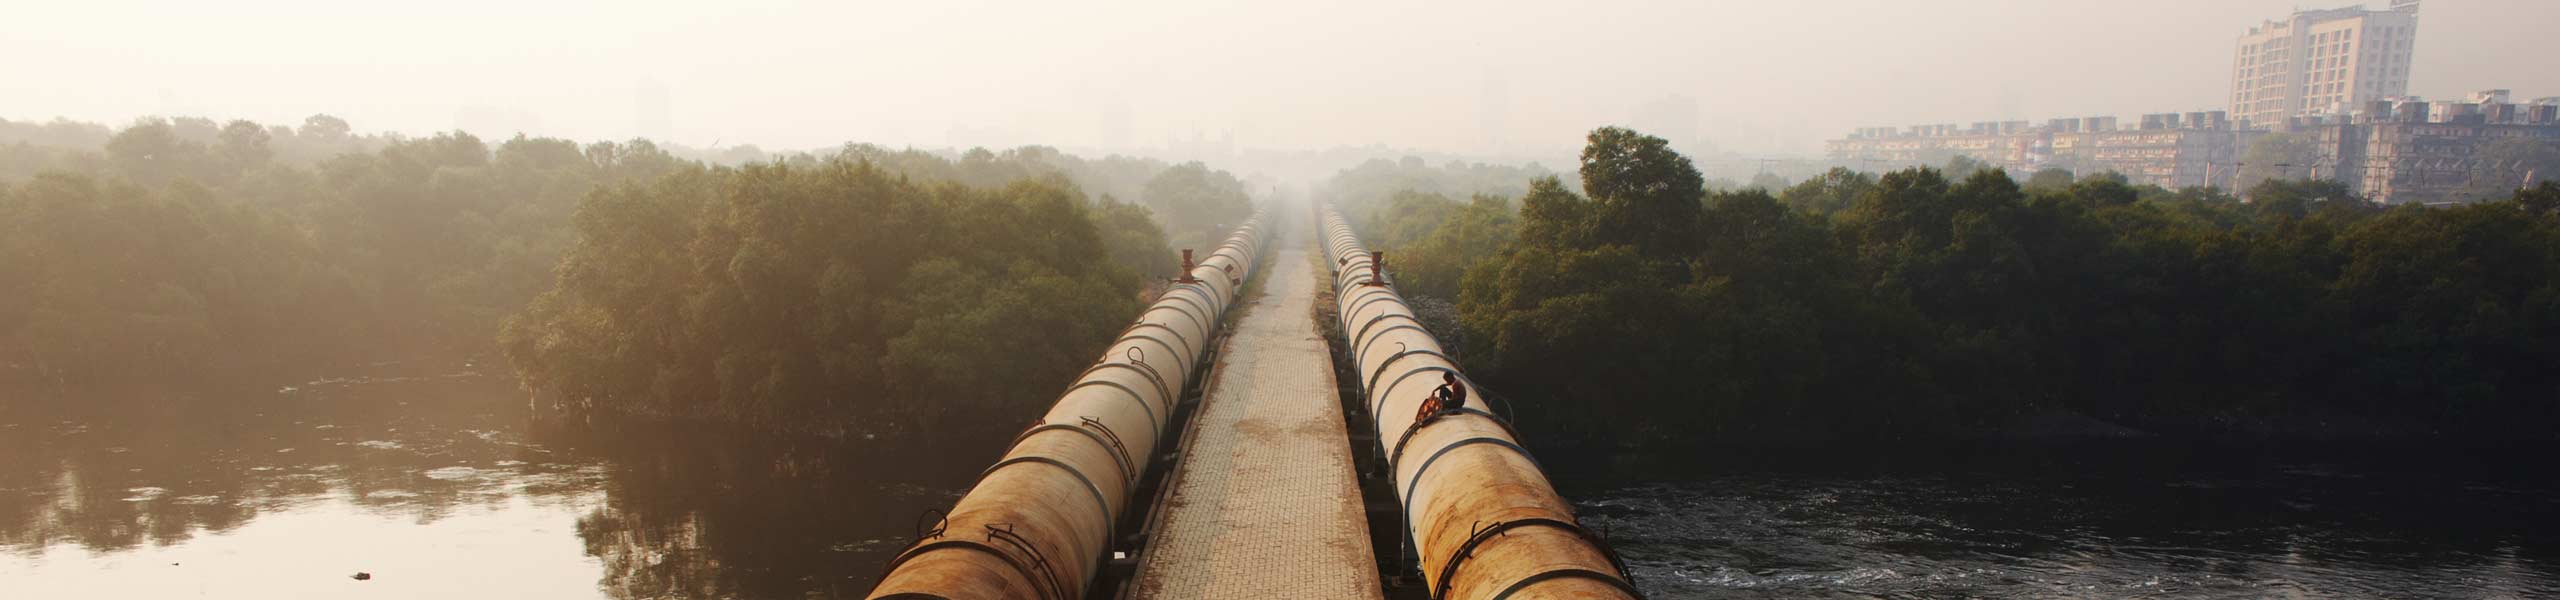 Reservoir water pipeline into Mumbai city, India